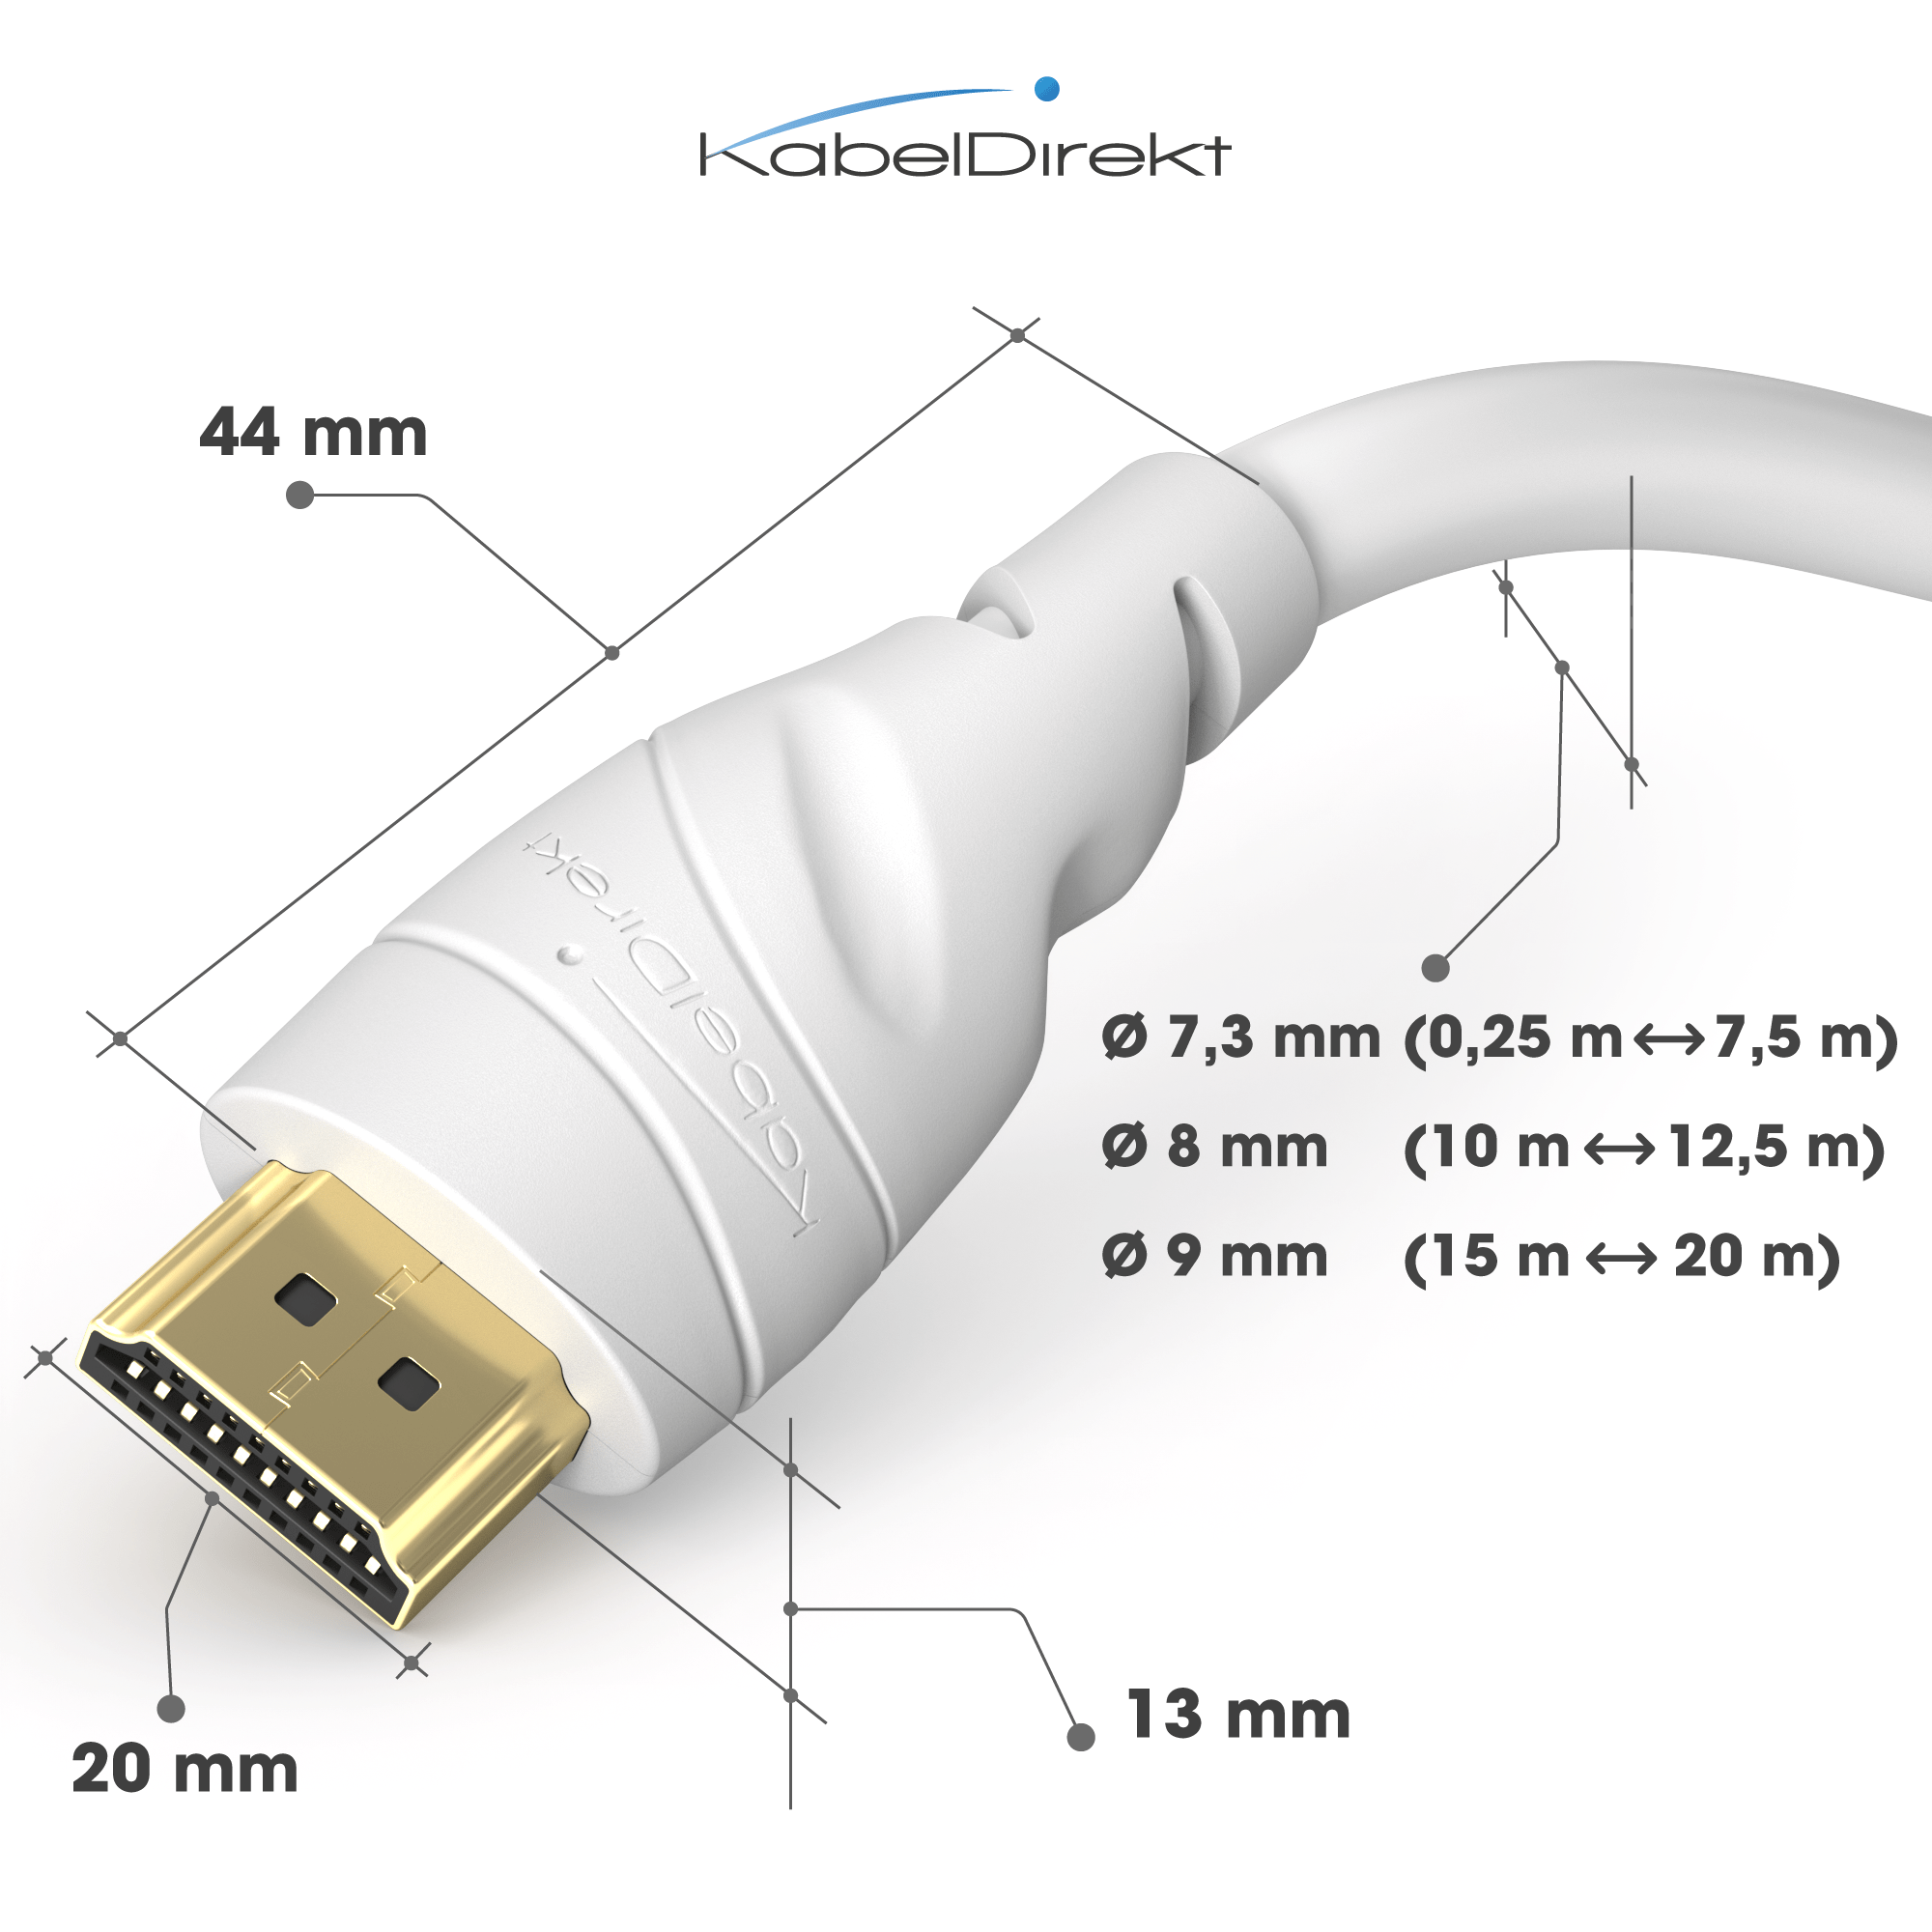 noodzaak Eik Slepen White 4K HDMI cable – with Ethernet, 4K/8K, 3D, ARC, HDR, 7.1 sound -  KabelDirekt